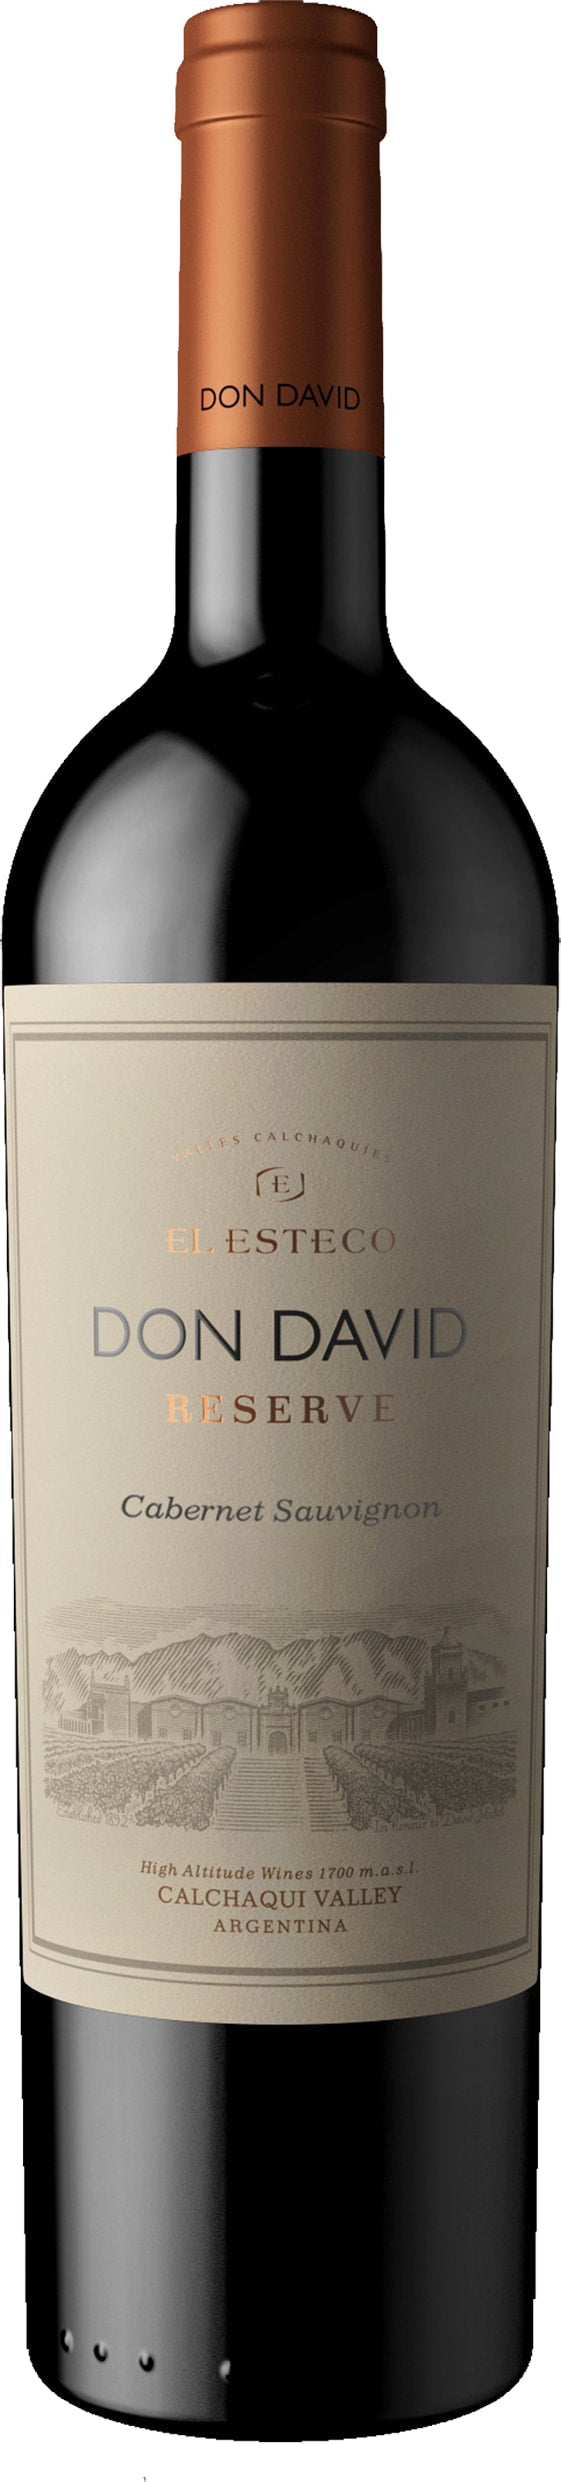 El Esteco Don David Cabernet Sauvignon 2021 6x75cl - Just Wines 